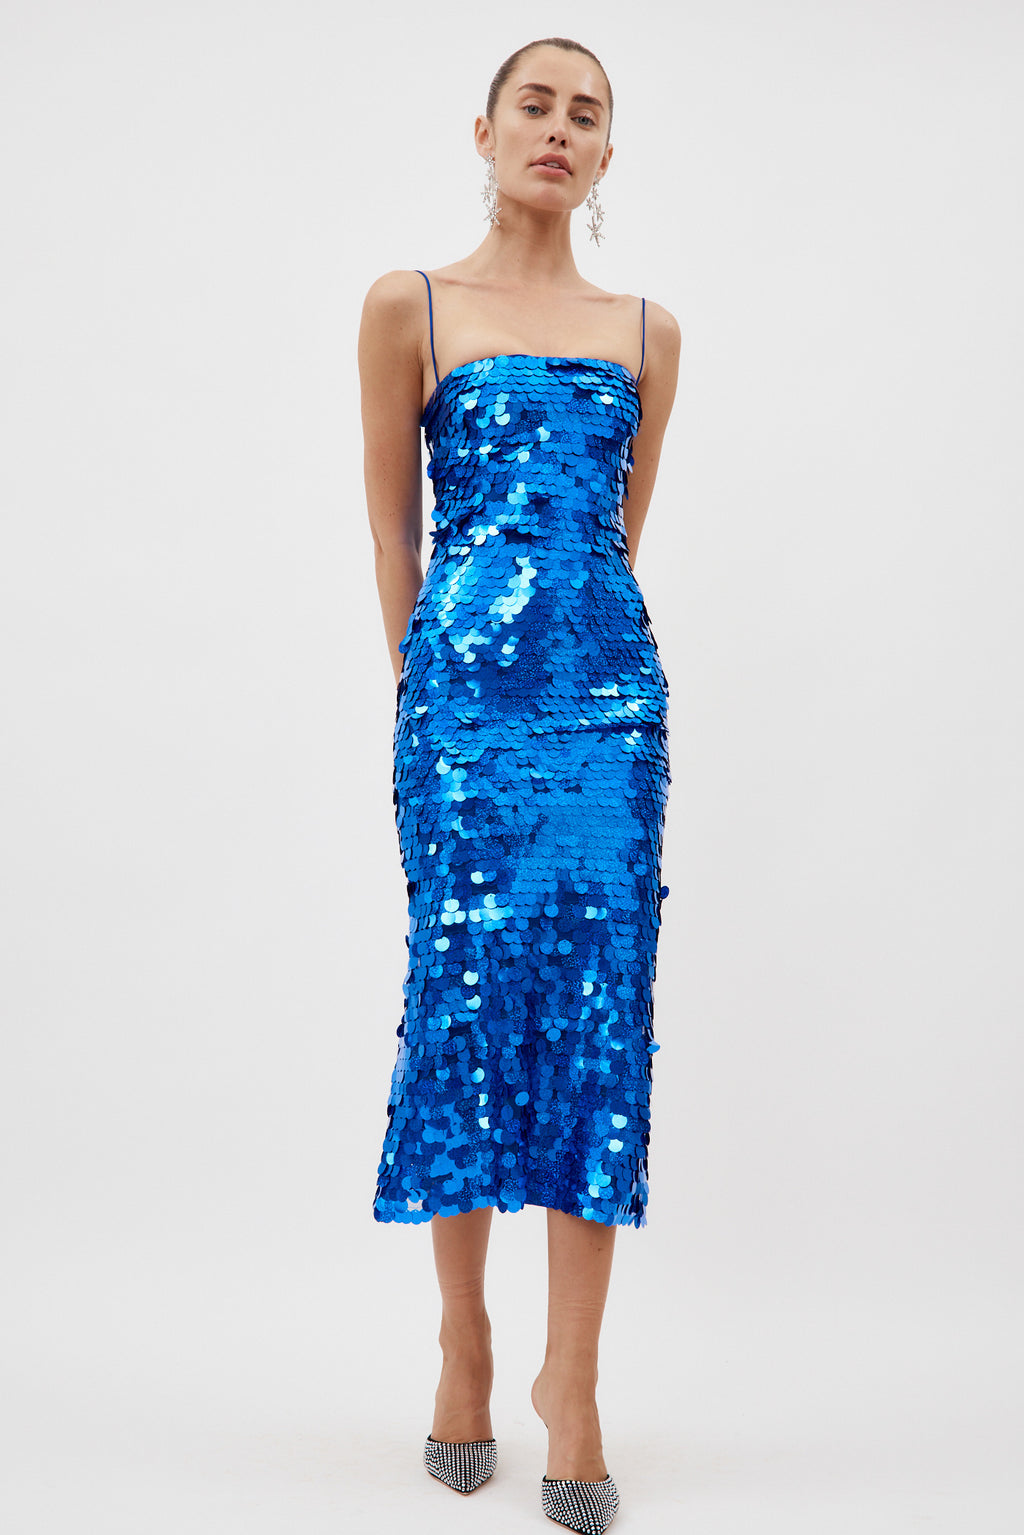 Phoenix Formentera Azul Dress